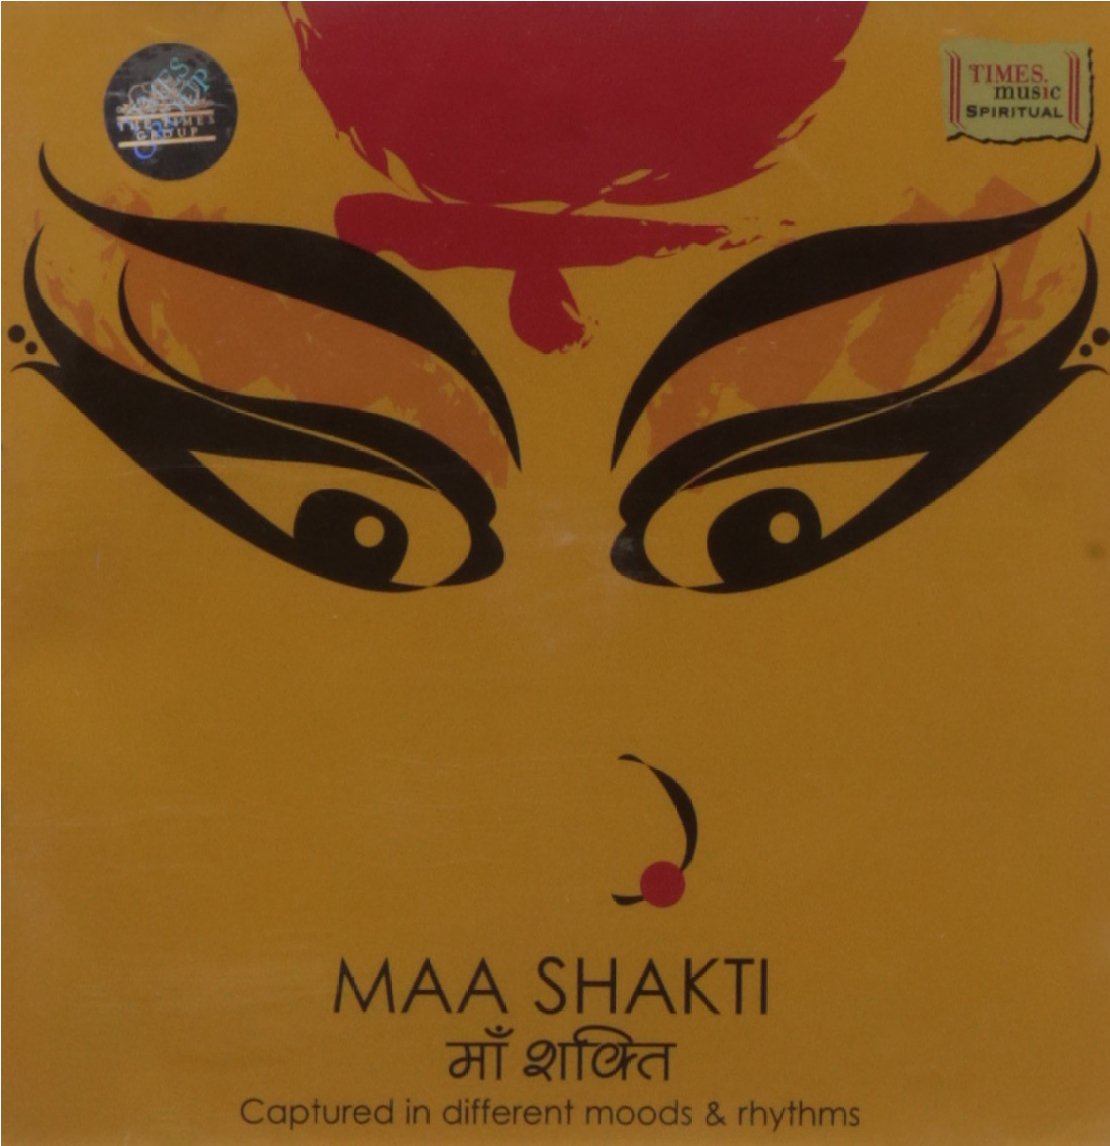 Maa Shakti.com Music